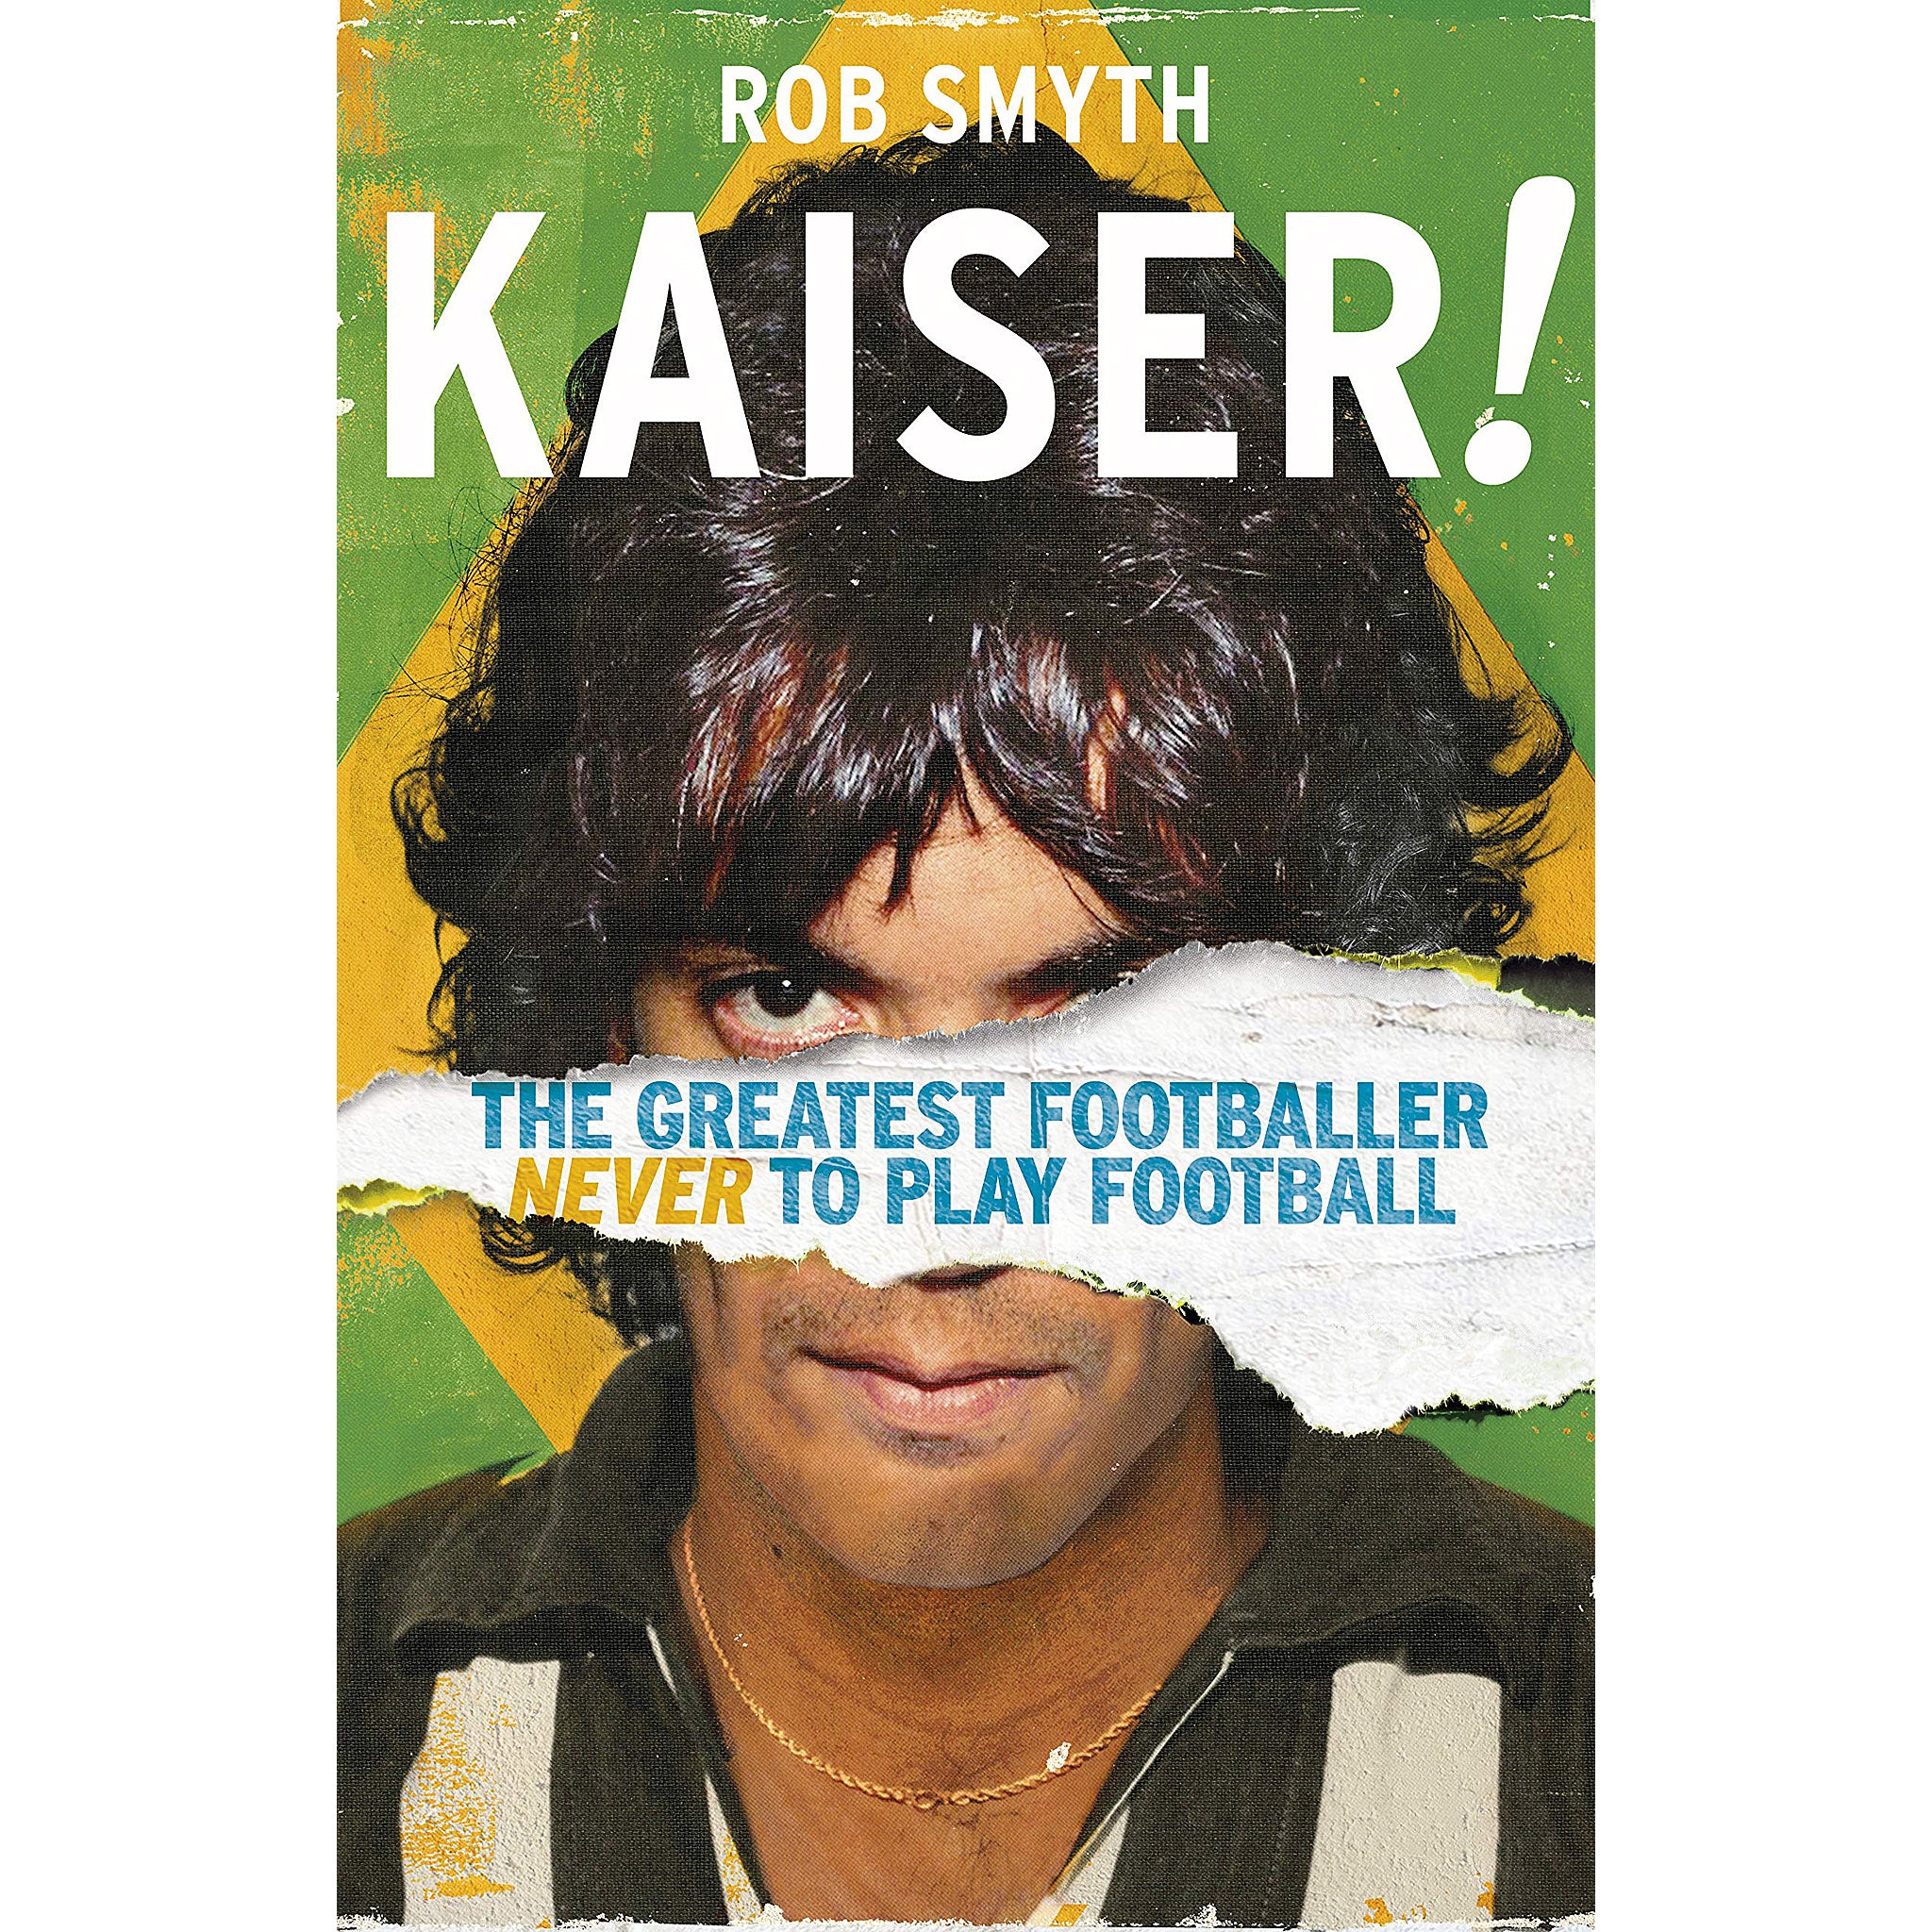 Kaiser! The Greatest Footballer Never to Play Football